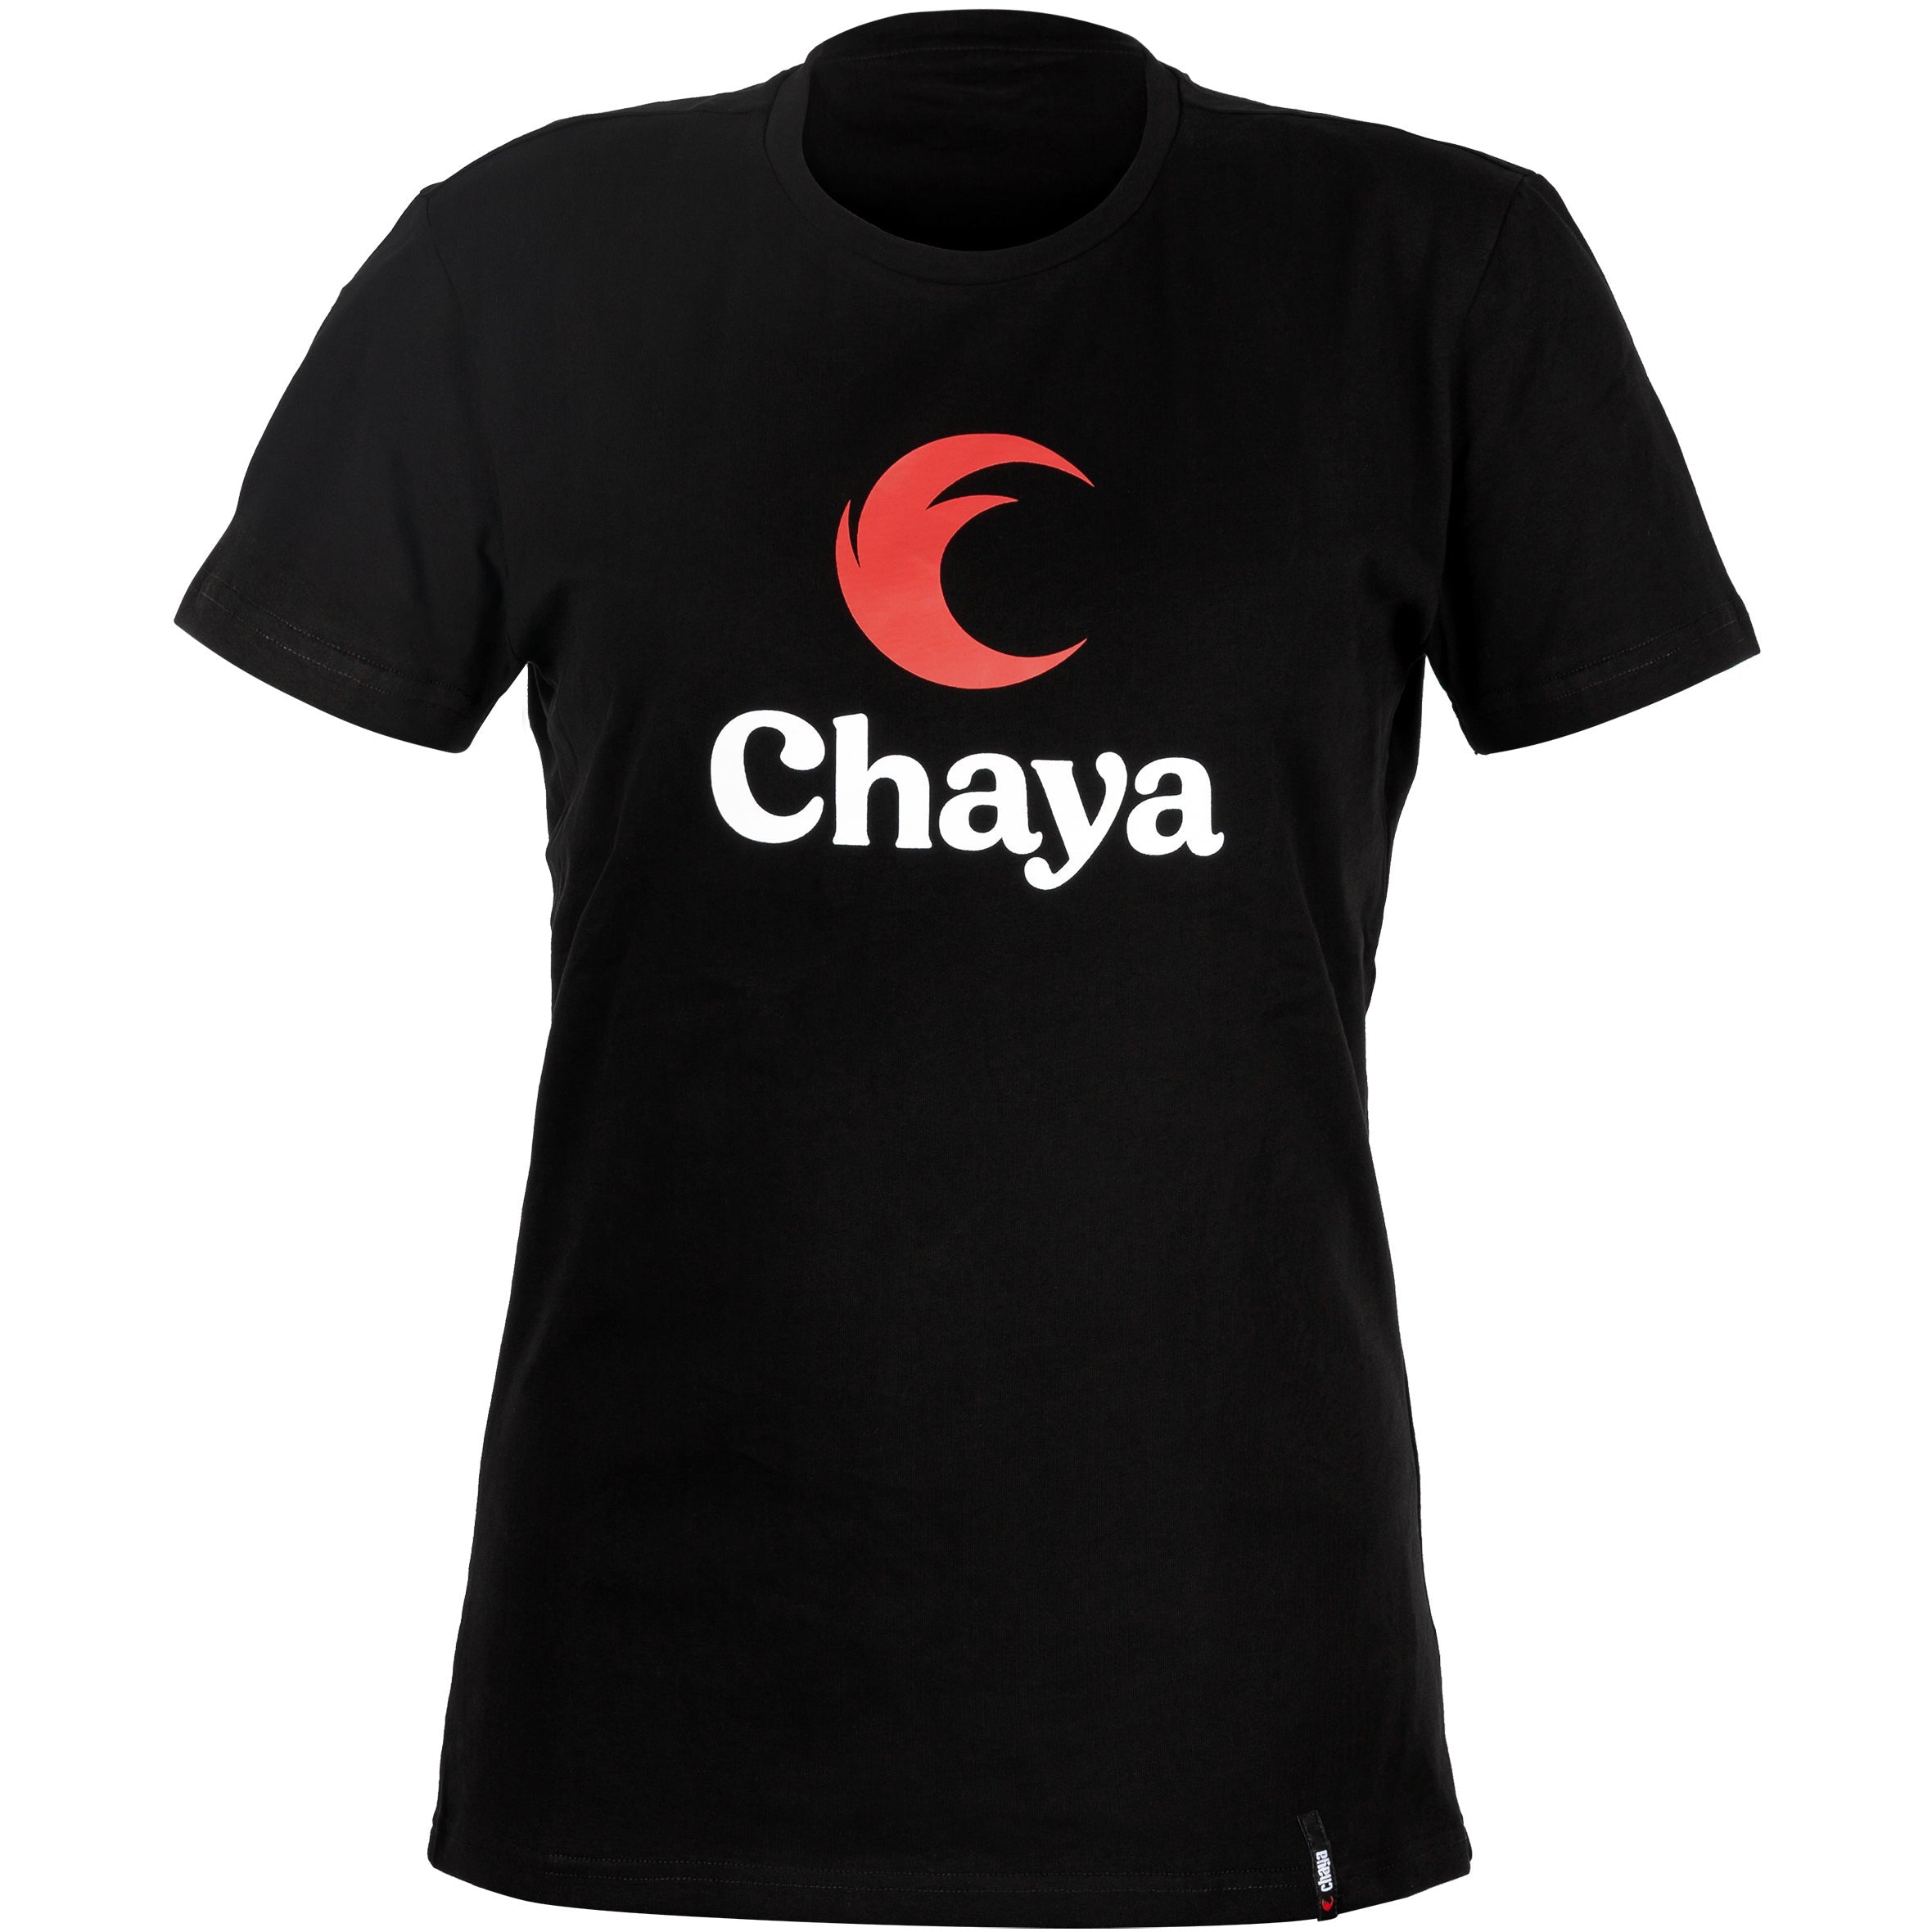 Chaya Team T-Shirt Black